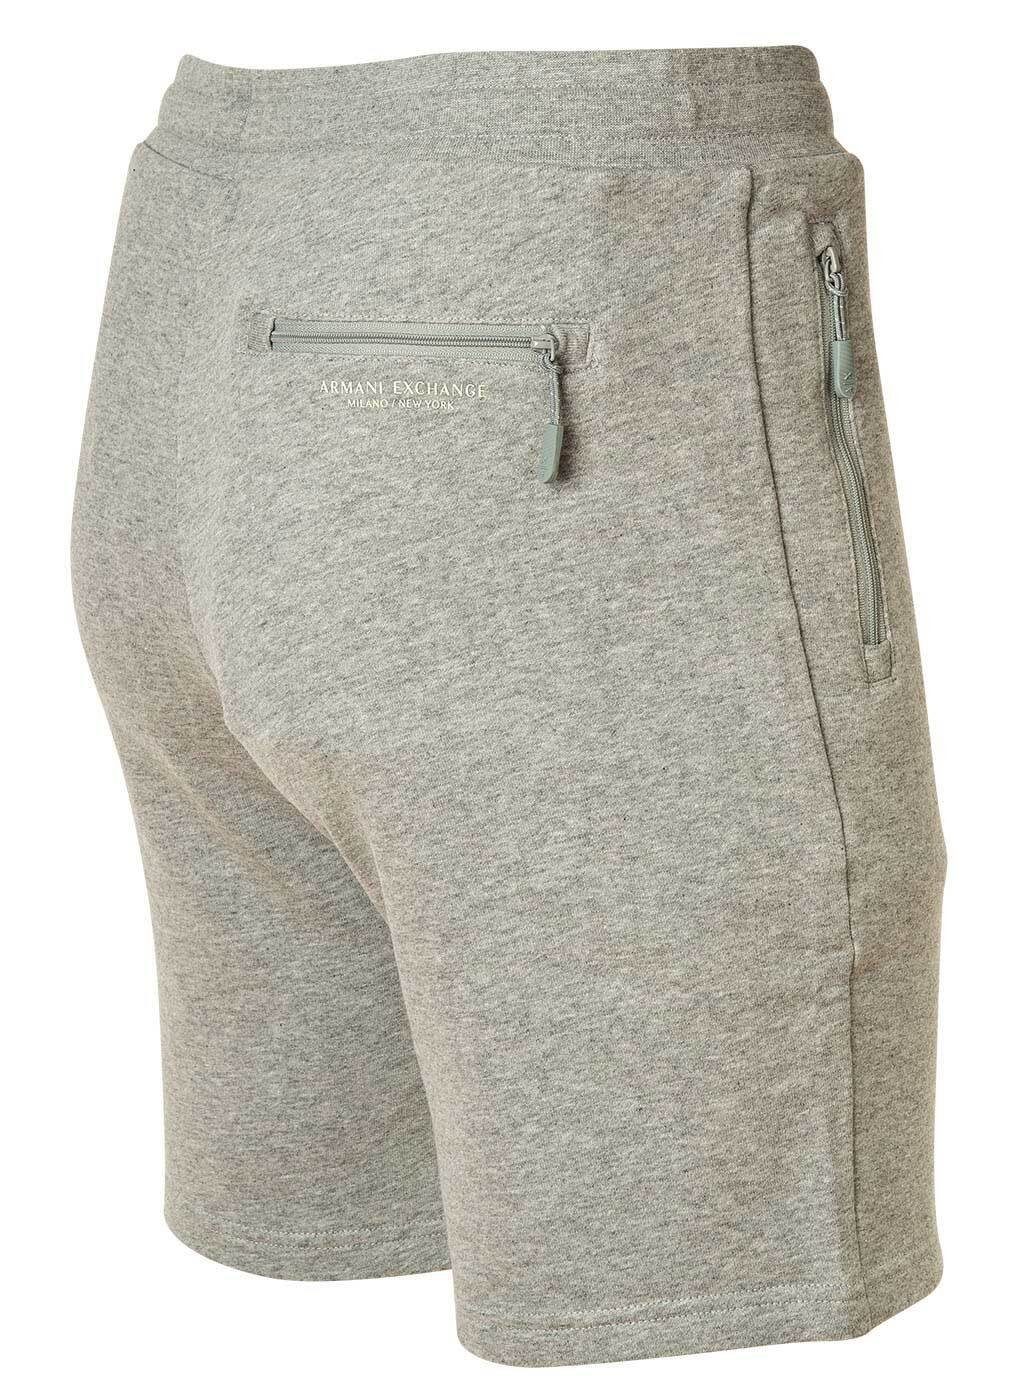 ARMANI EXCHANGE Sweatshorts Herren kurz Pants, Loungewear Jogginghose Grau 